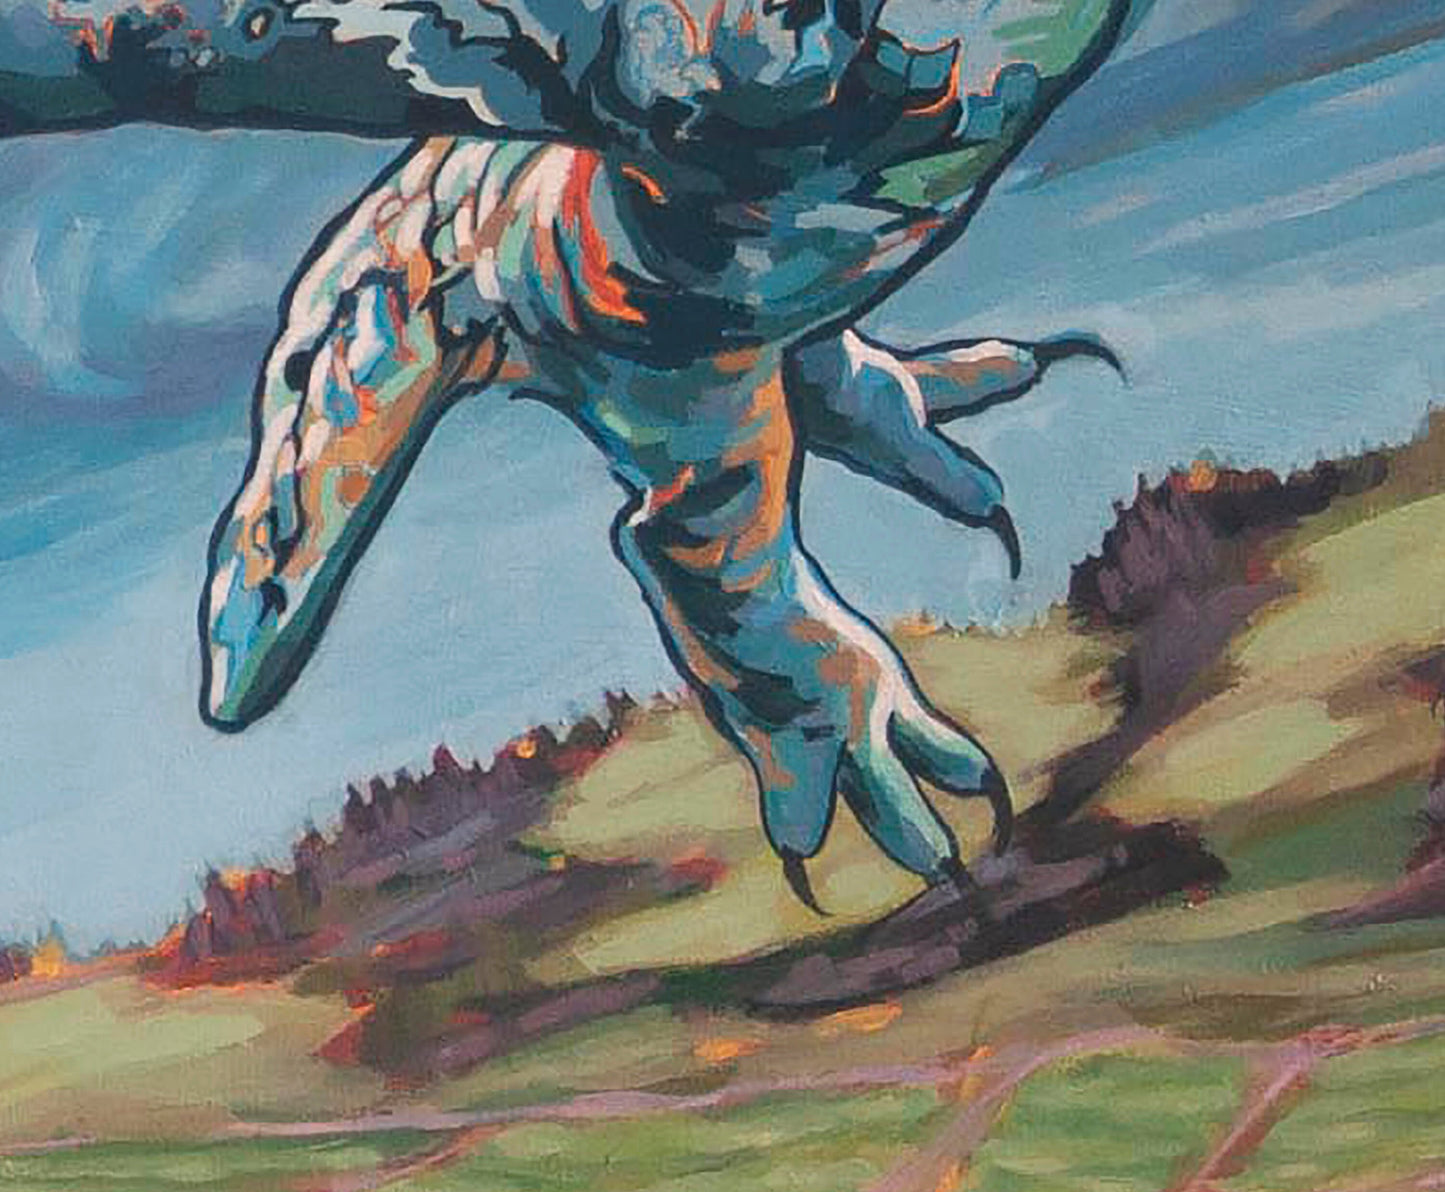 Harmony With The Wind - Owl sweeps the sky, wall art print